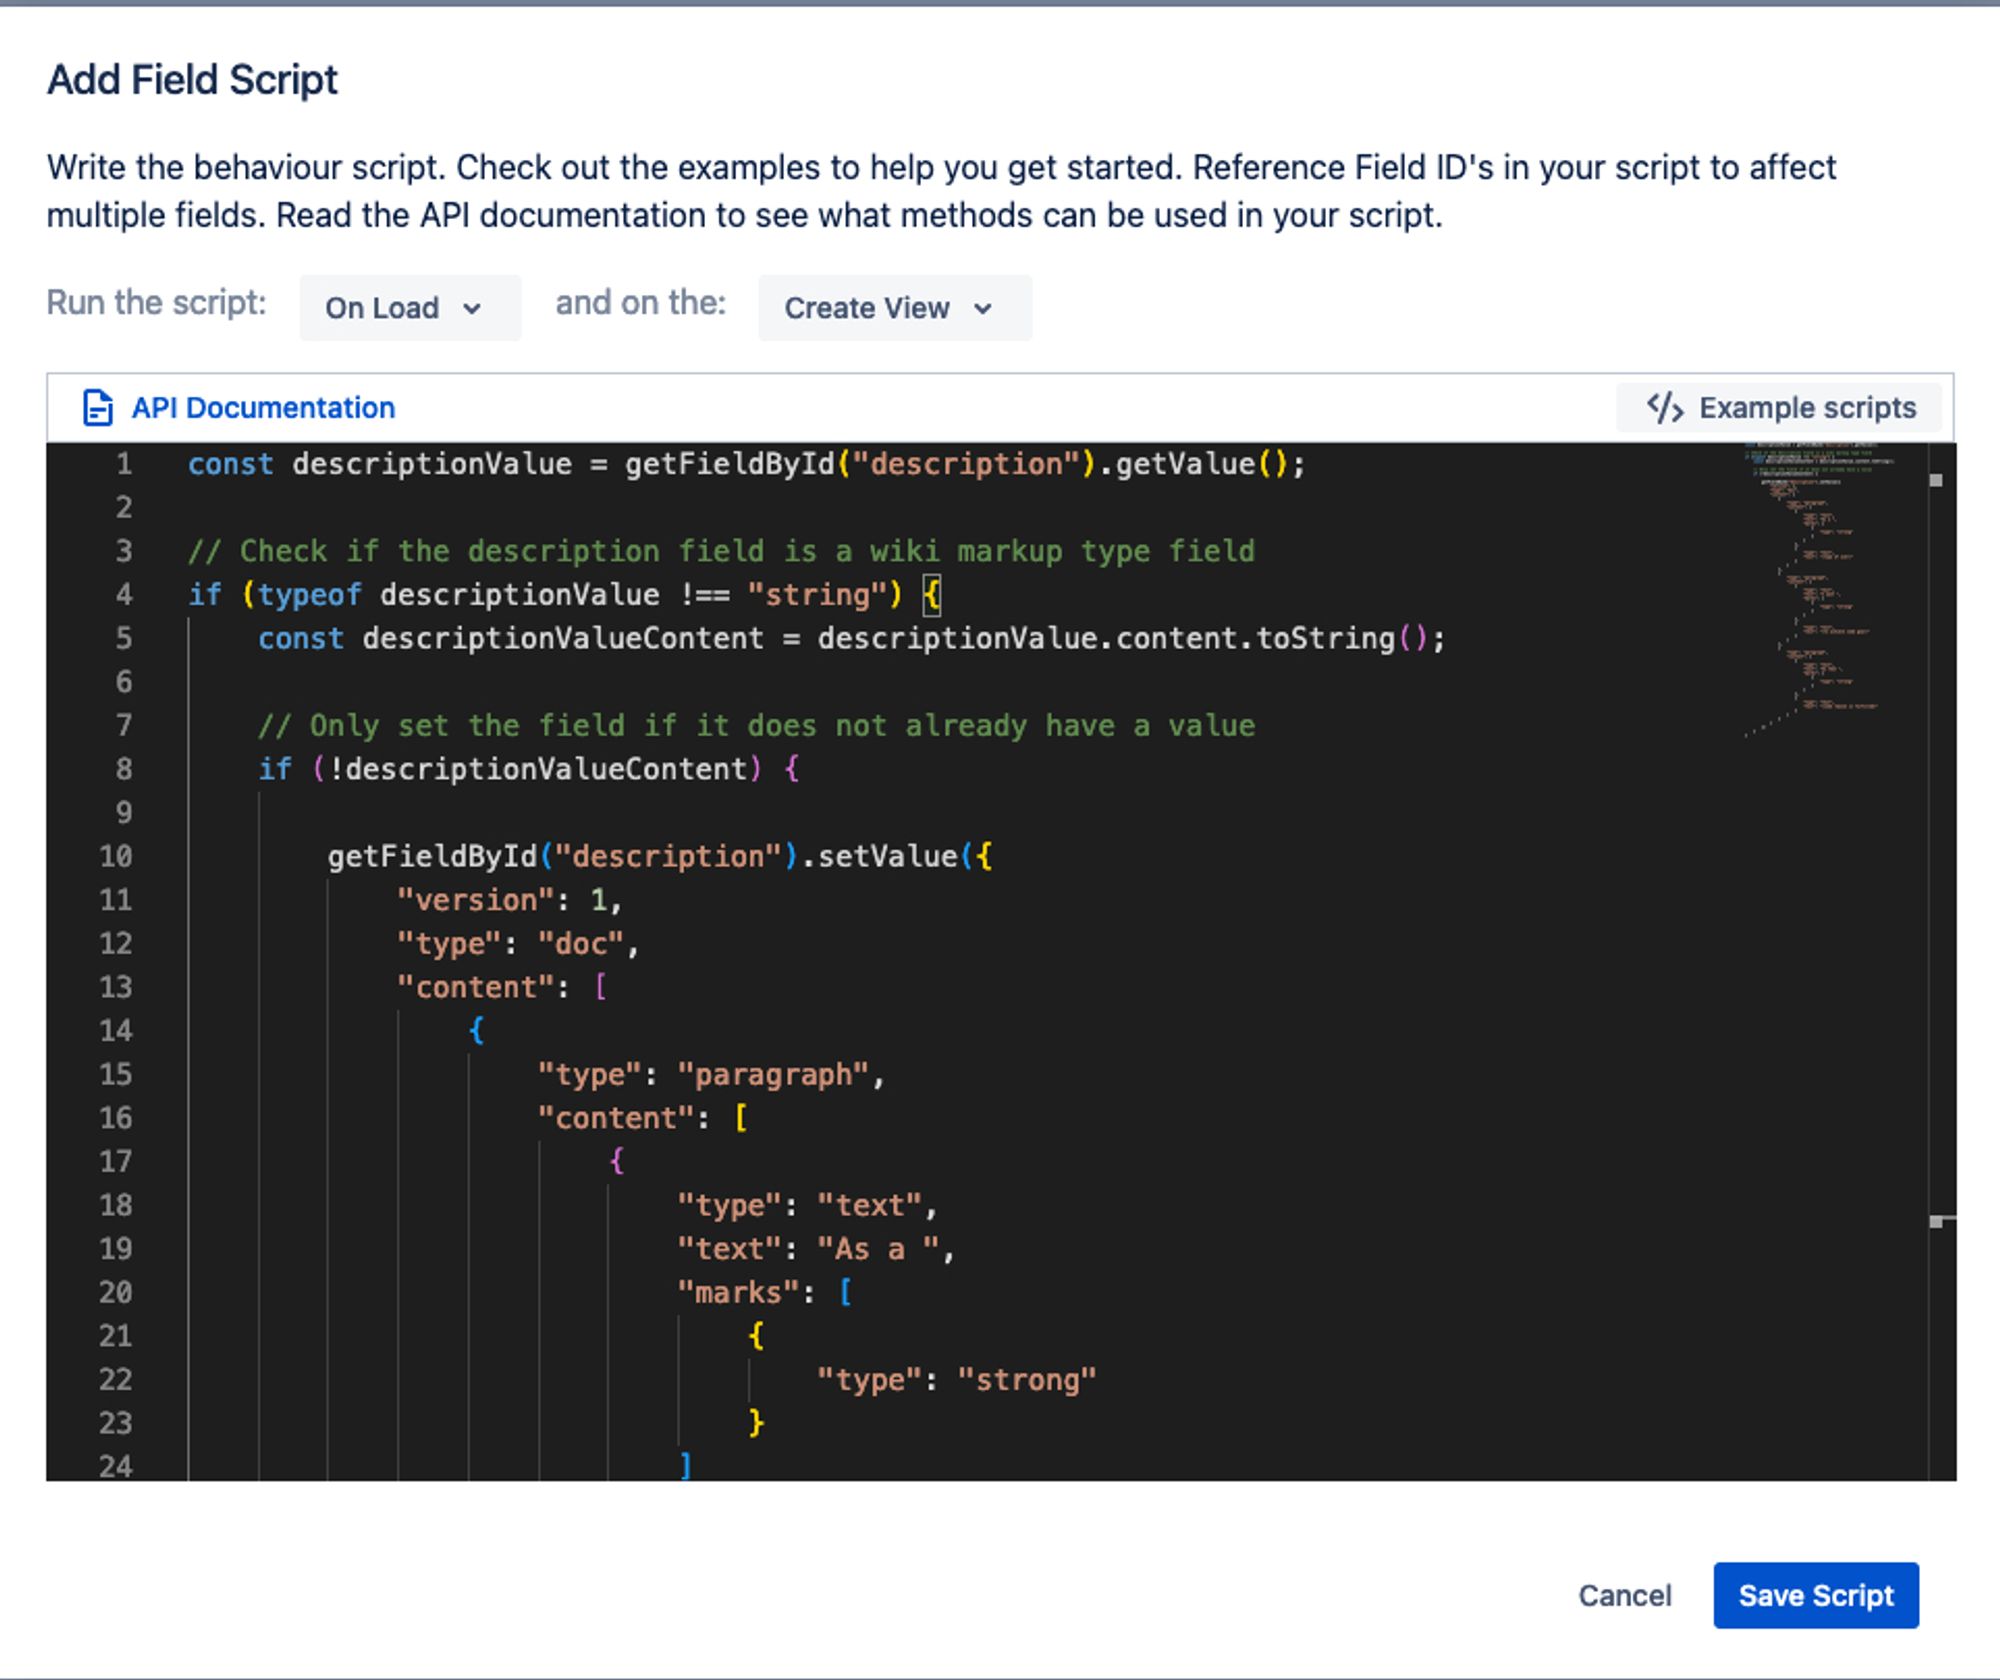 A screenshot of how the Add Field Script code box should look